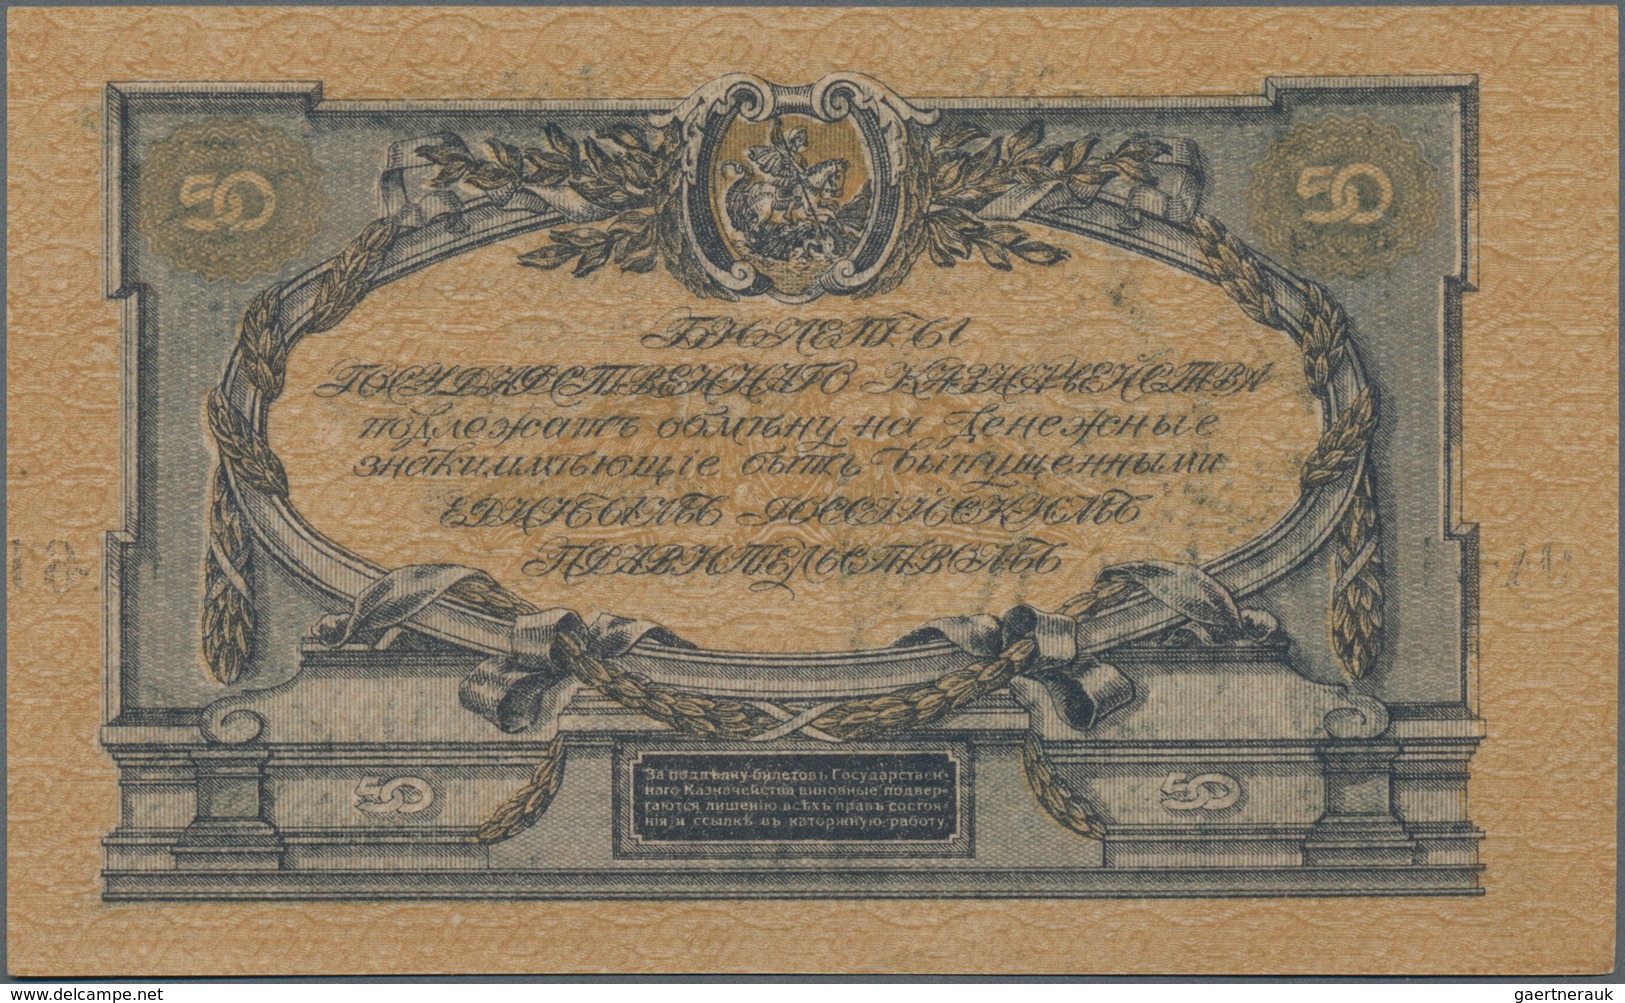 Europa: Huge collectors album with 446 banknotes Europe, comprising for example Yugoslavia 50 Kruna